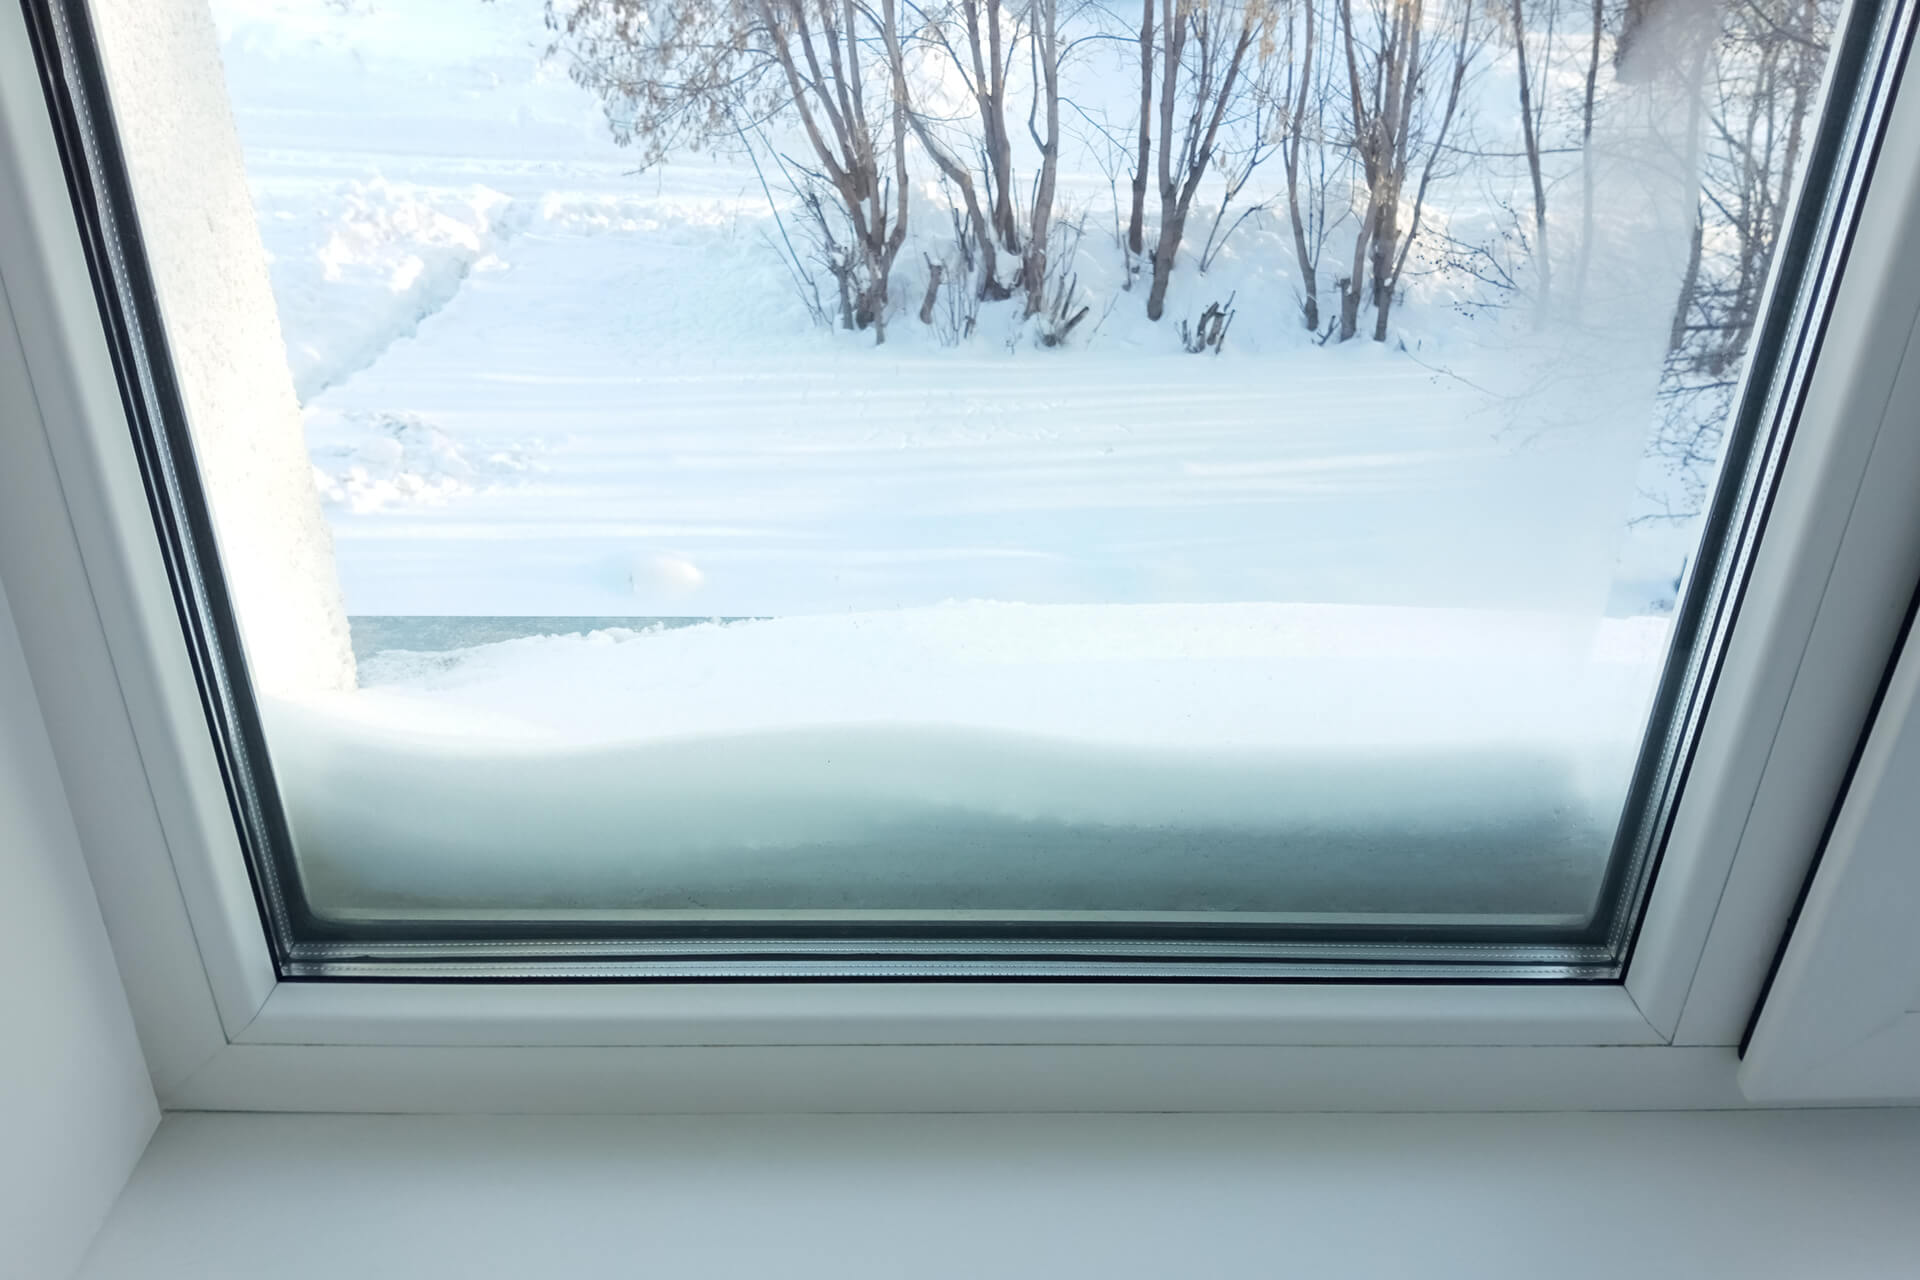 Snow buildup by window.